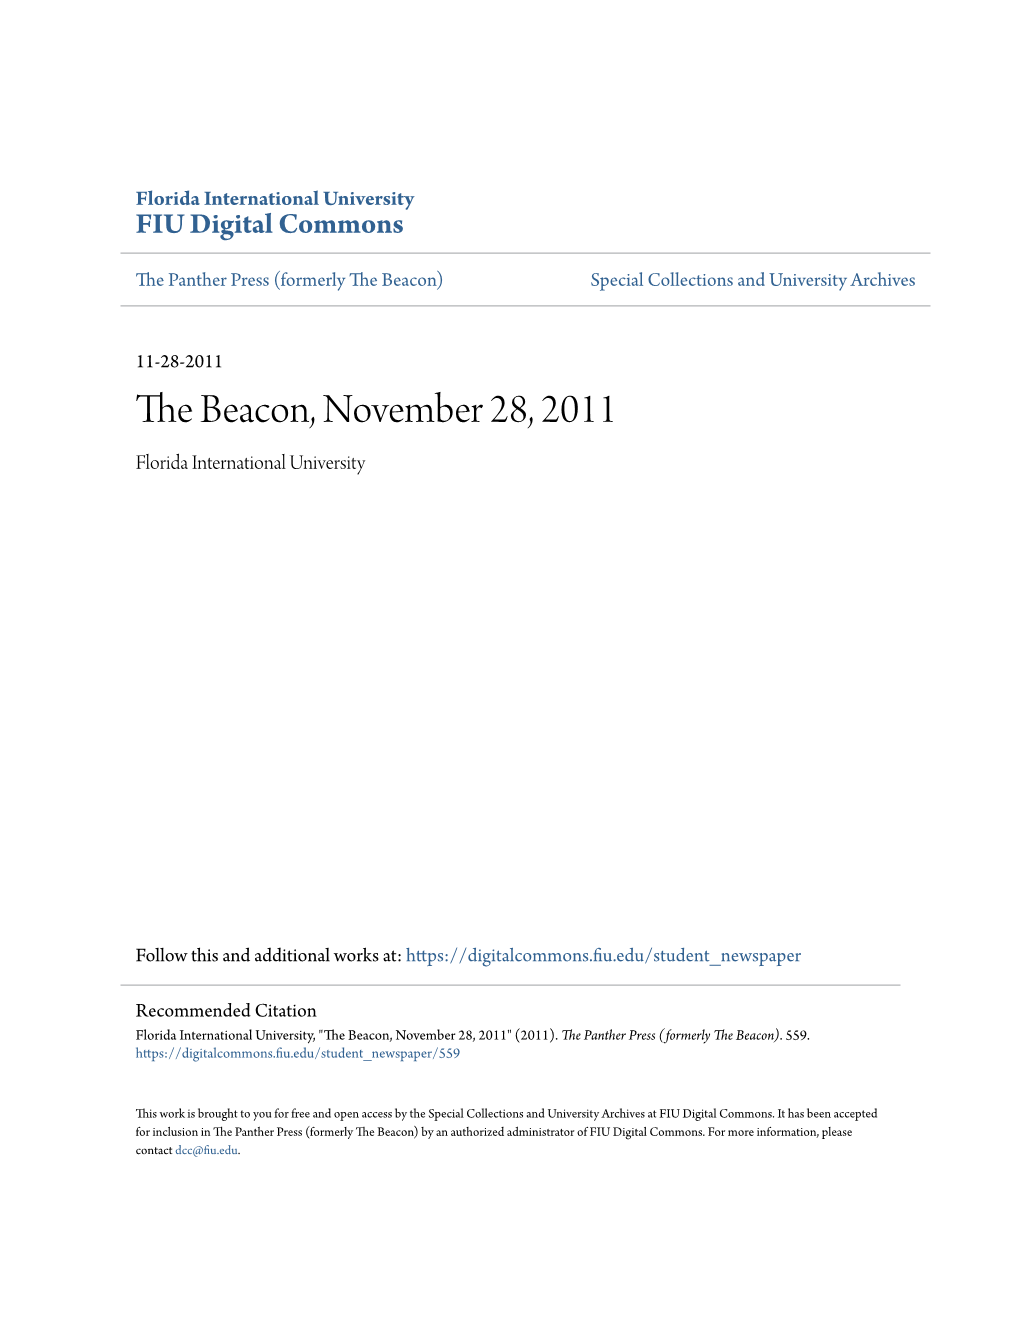 The Beacon, November 28, 2011 Florida International University